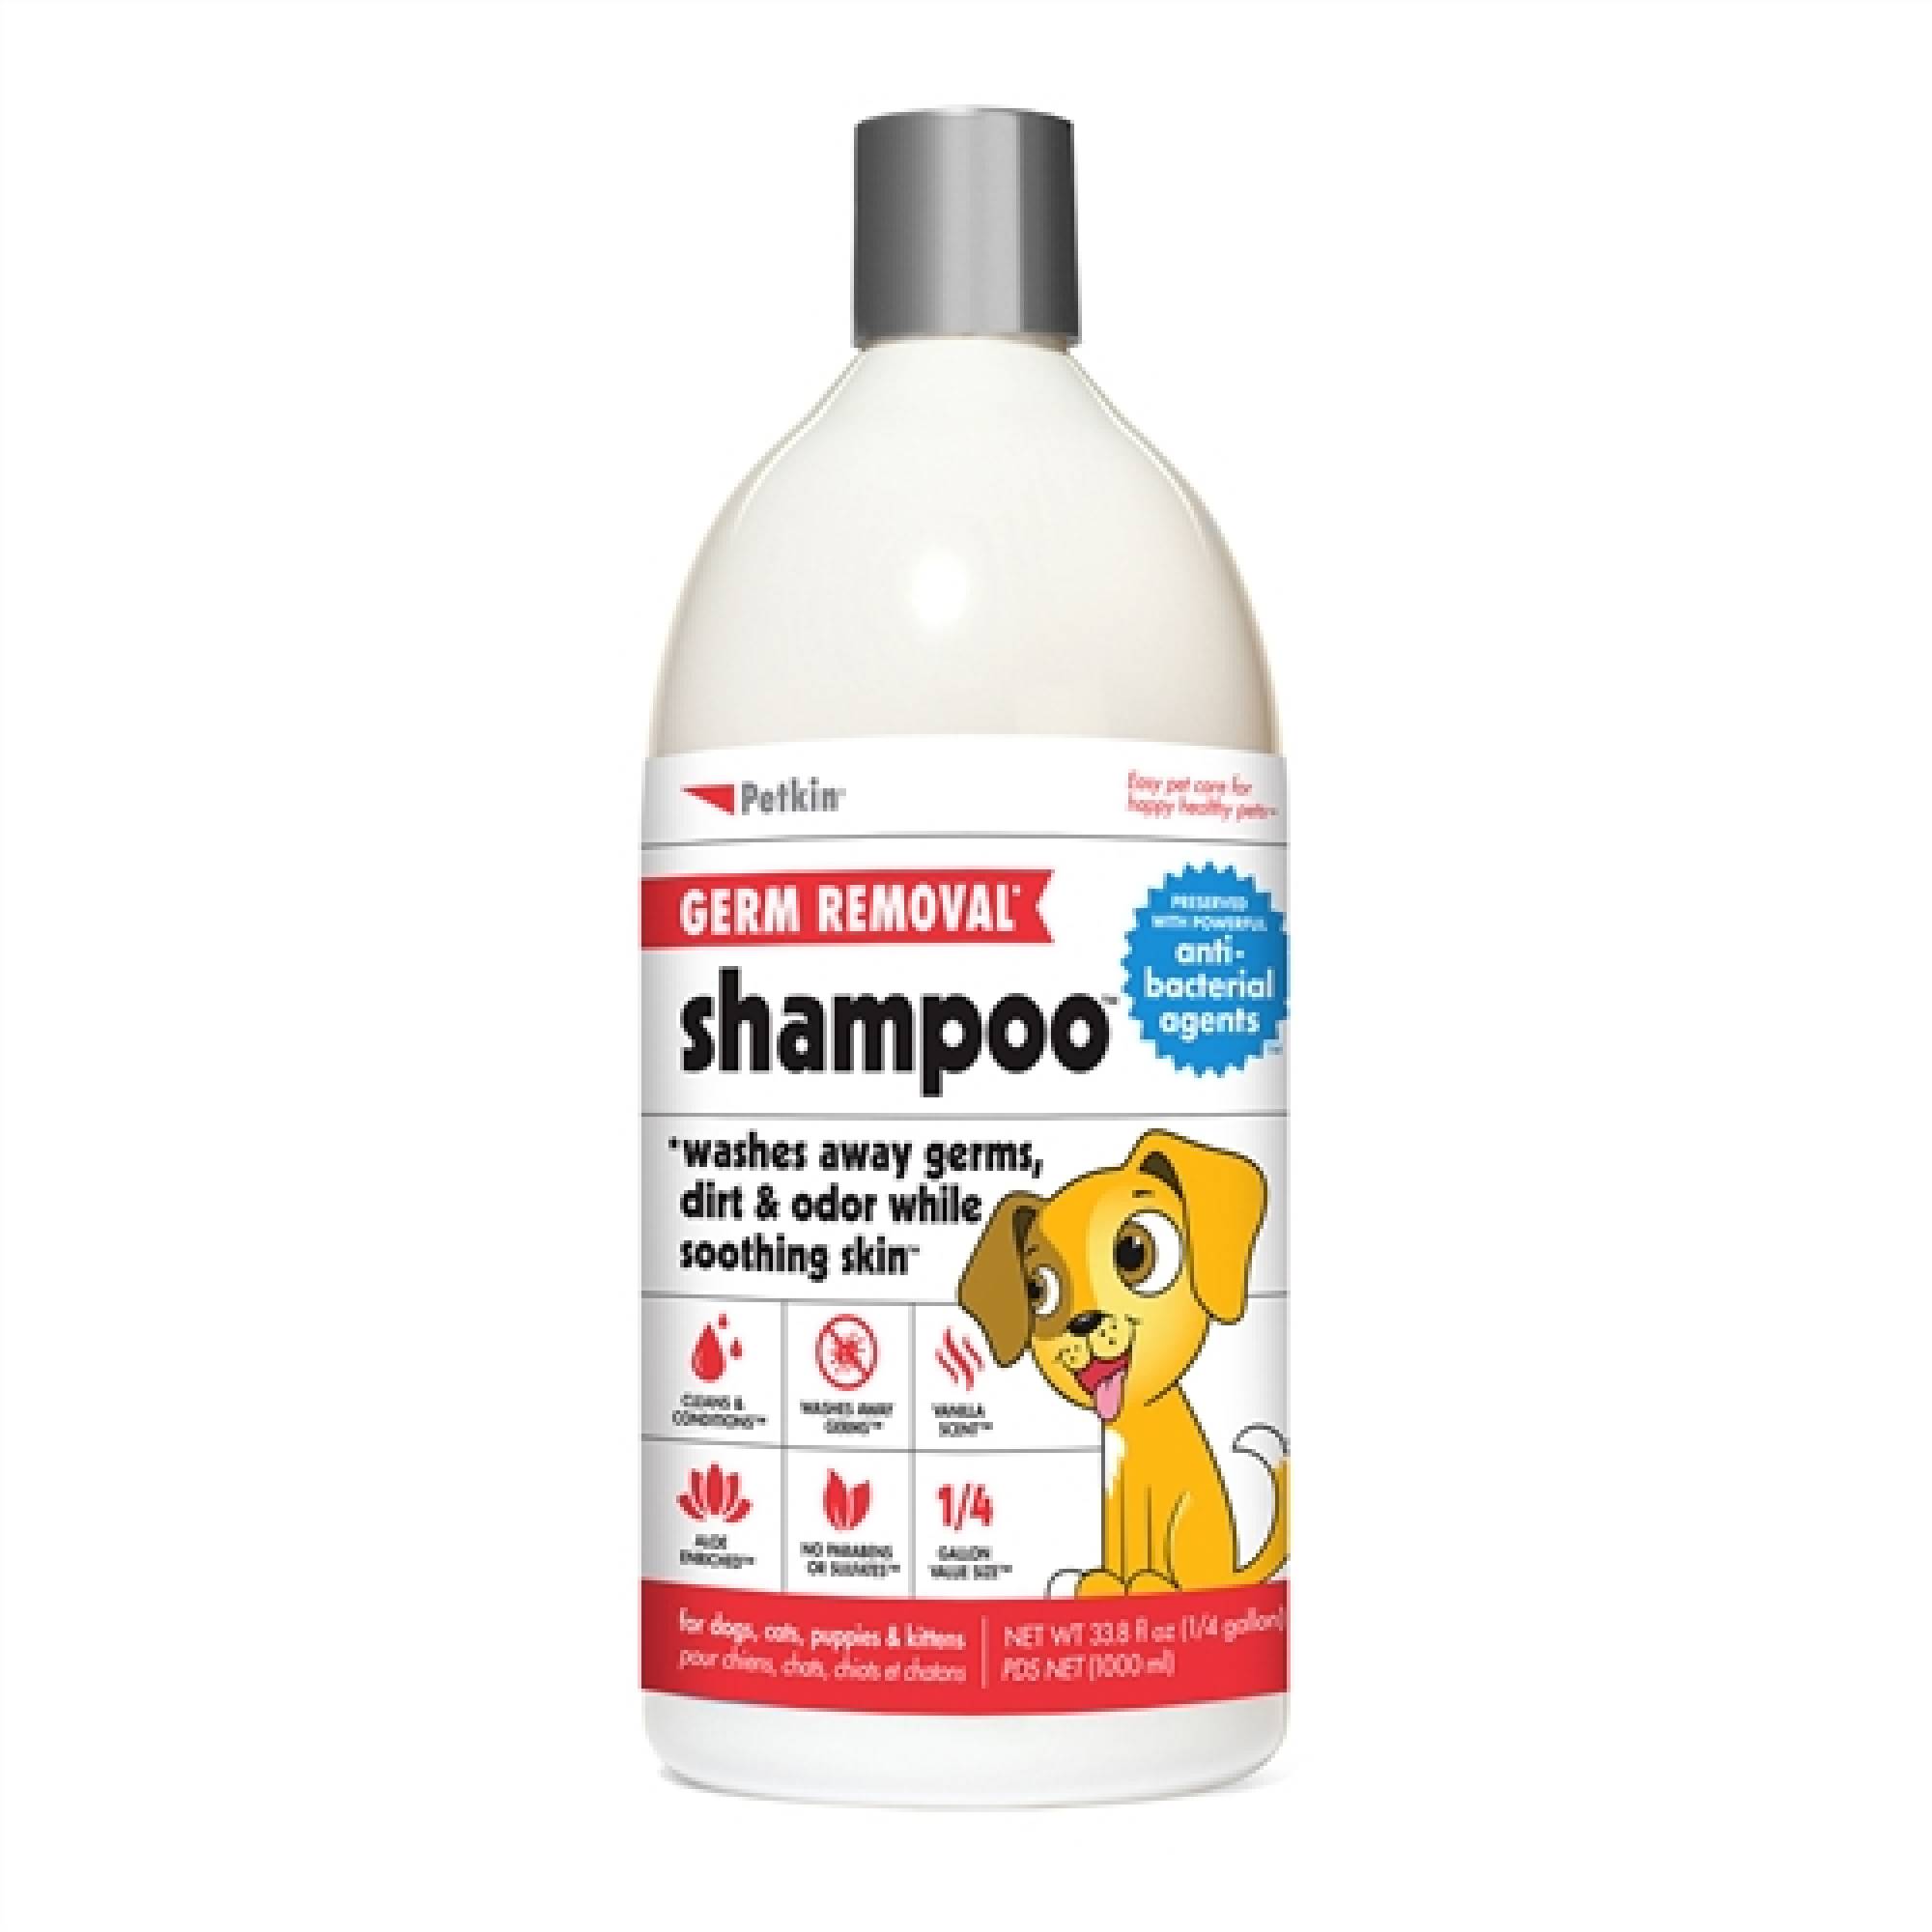 Petkin Germ Removal* Shampoo (33.8 oz)